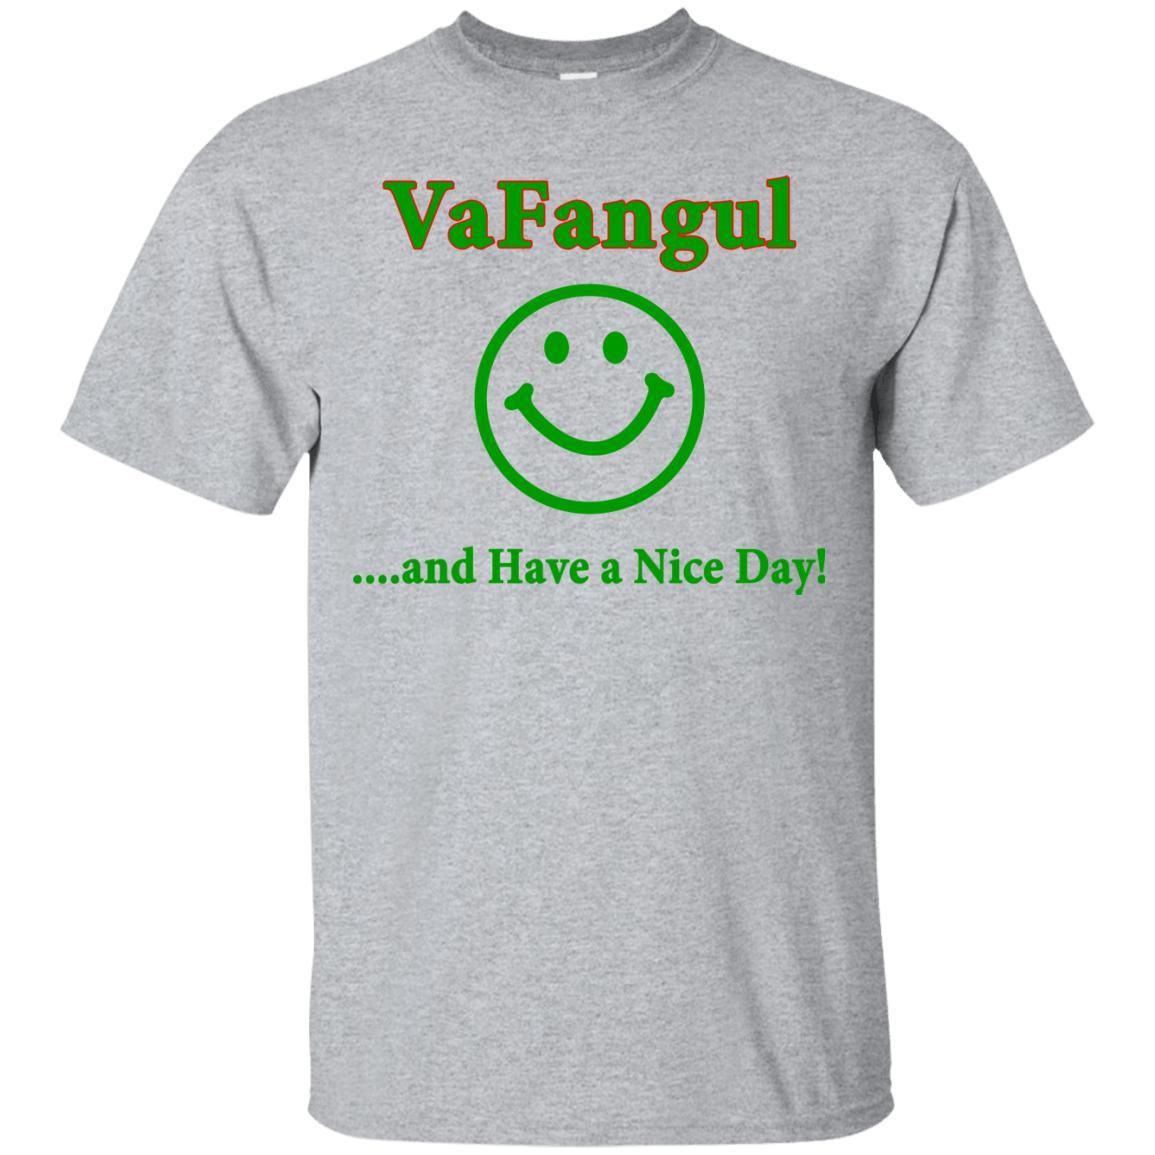 VaFangul Shirts